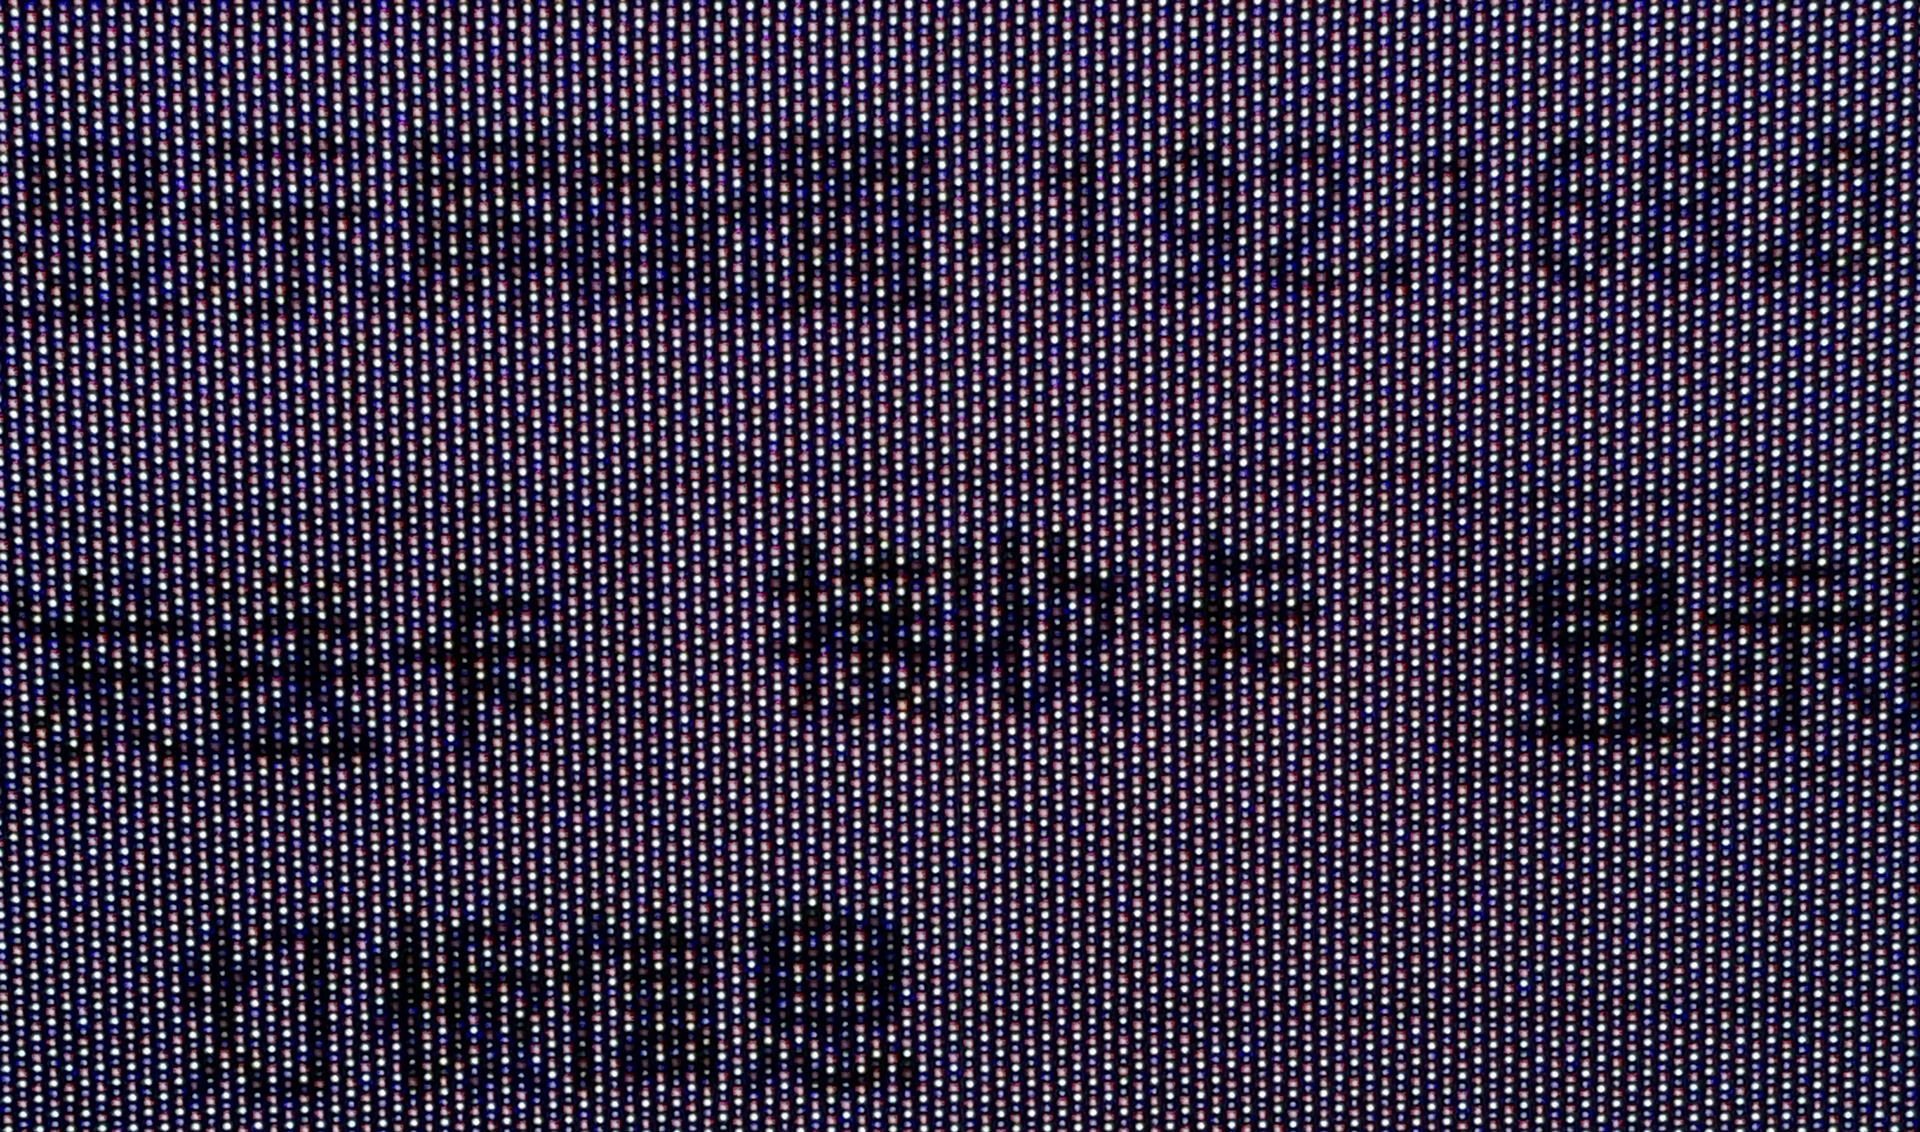 virtual pixel ,dynamic pixel cob led display text display